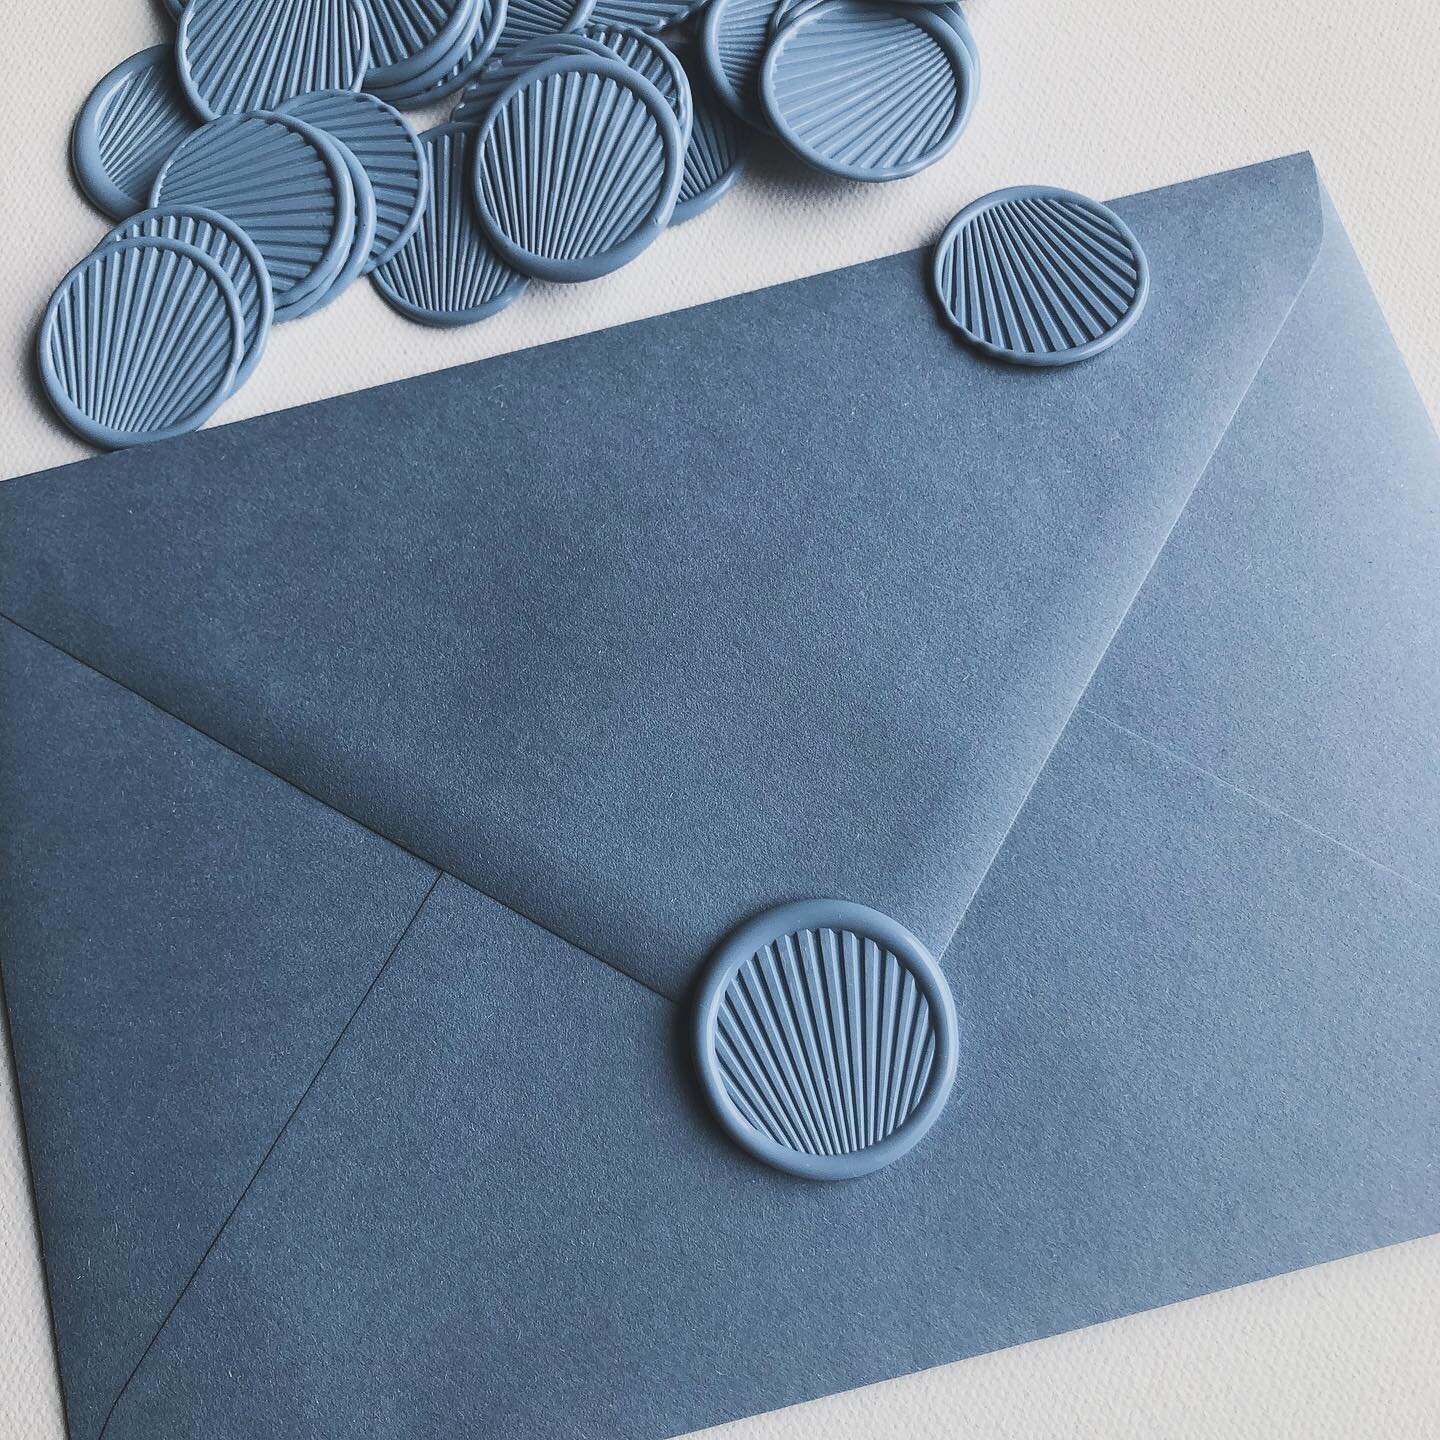 Dusty blue shell wax seal stickers on matching envelopes 💌🐚
&mdash;
#dustyblue #shells #shell #weddingsuppliers #blue #envelope #waxseal #wax #seals #waxseals #sealingwax #waxsealstamp #waxsealstickers #waxsealing #shellwaxseal #weddingstationery #